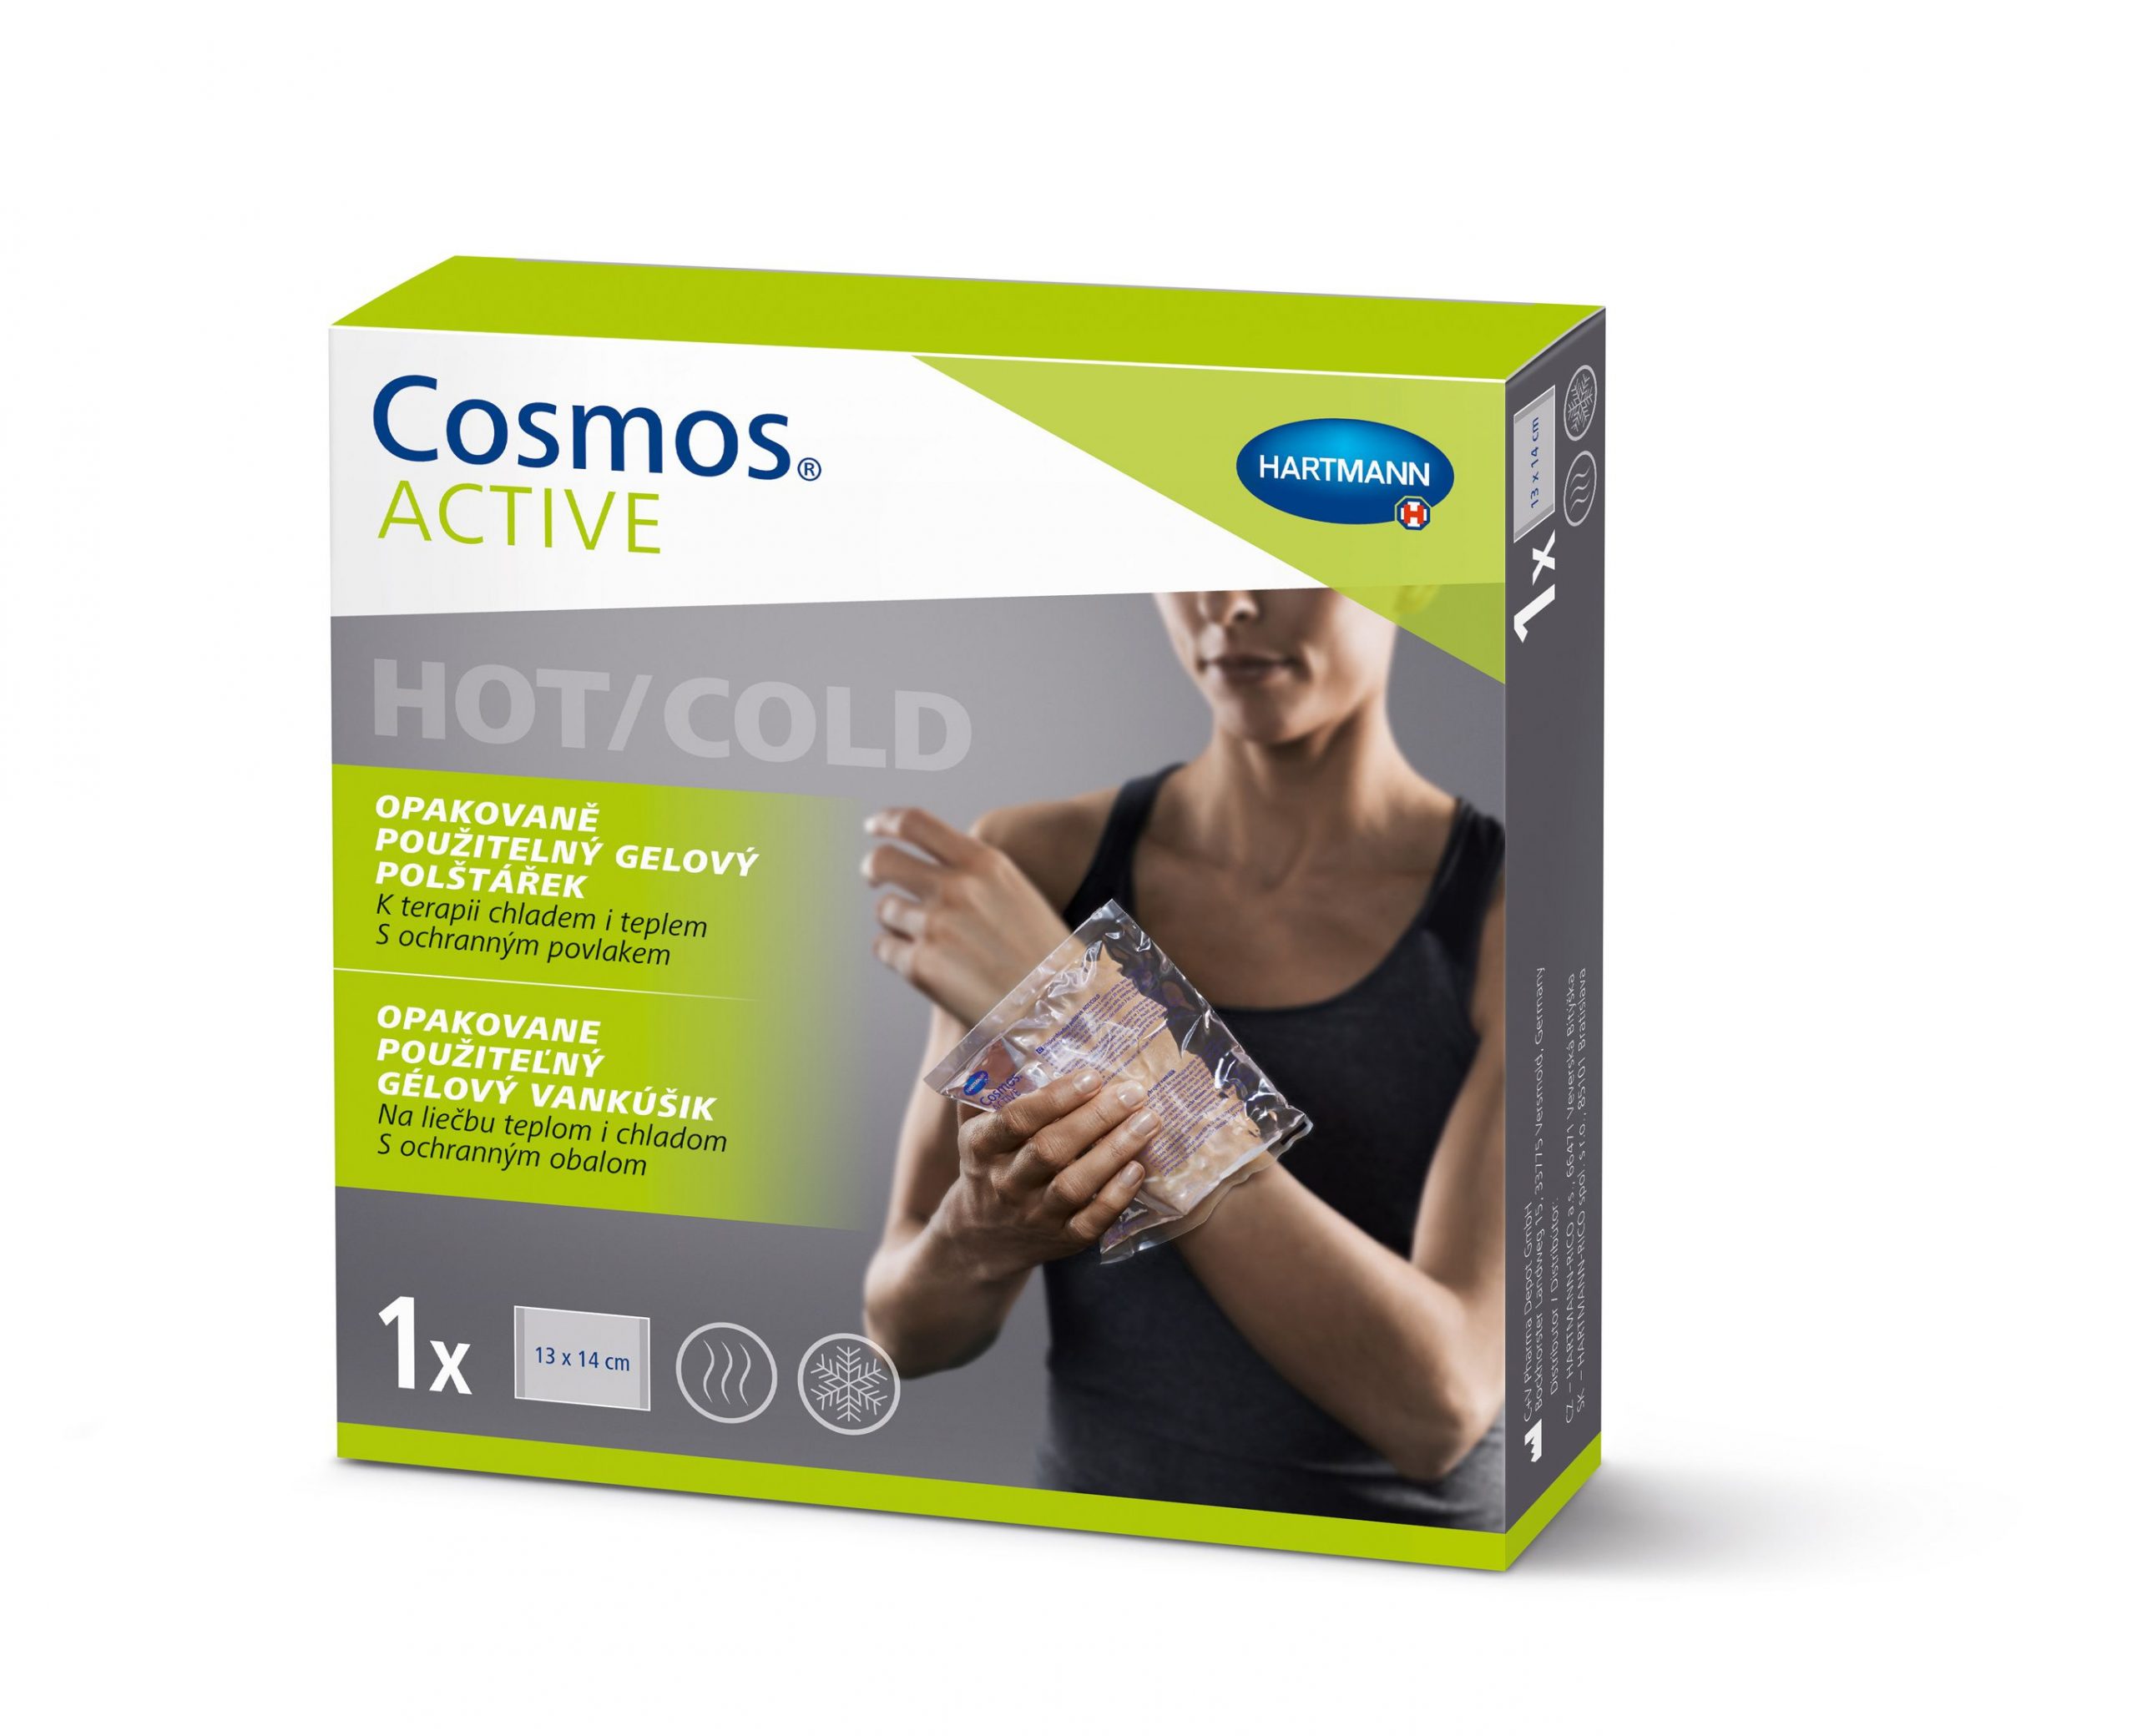 Cosmos Active Hot/Cold 13 x 14 cm gelový pošltářek 1 ks Cosmos